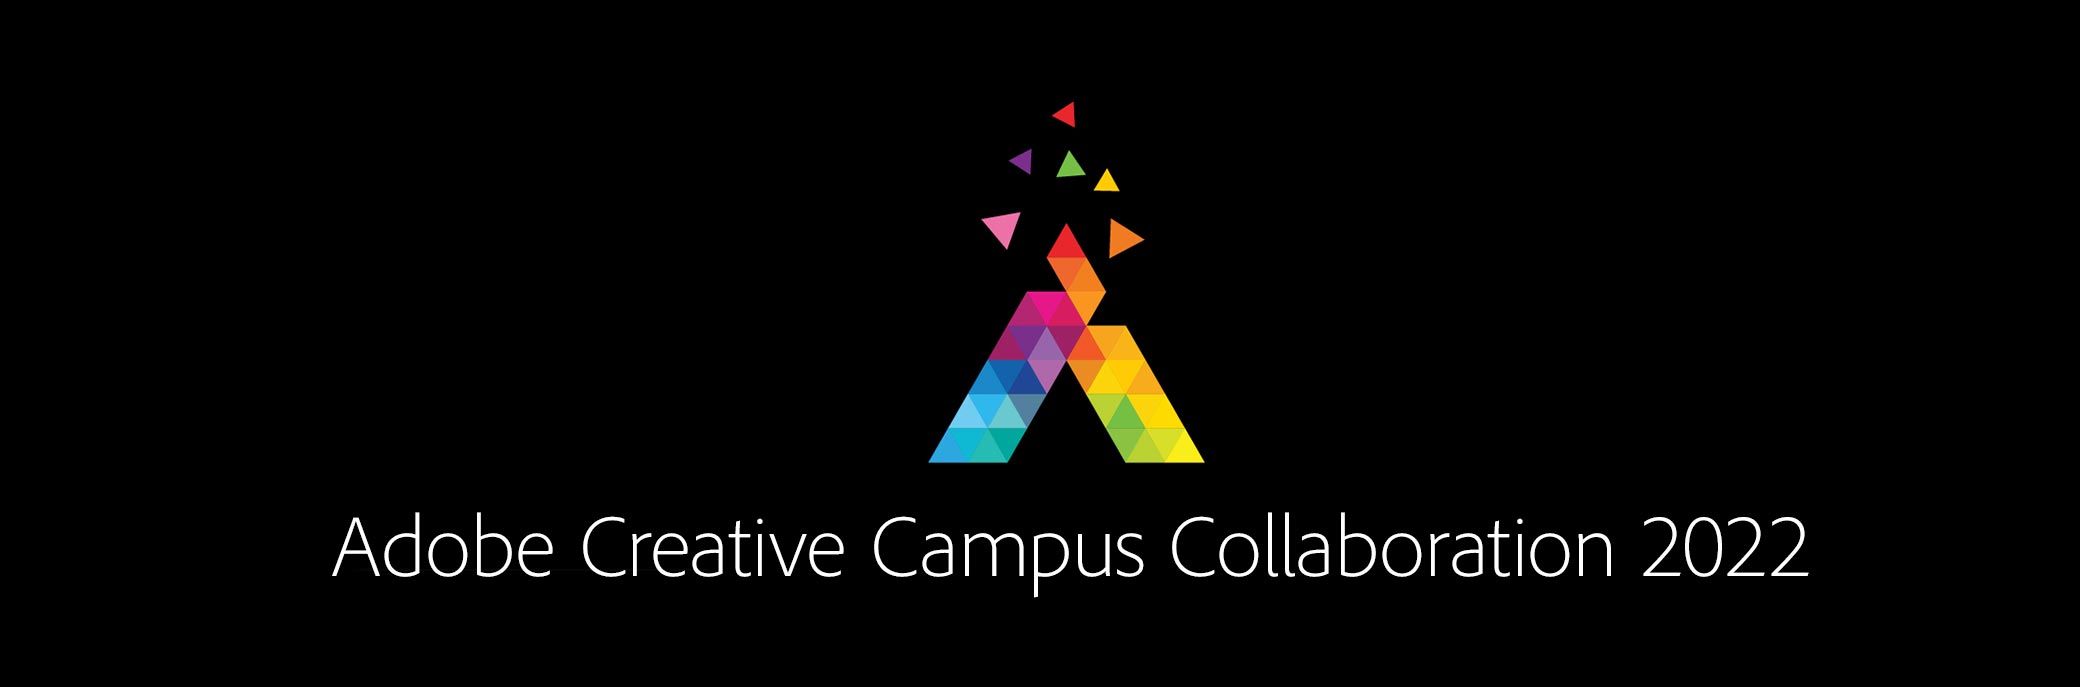 Adobe Creative Campus Collaboration 2022